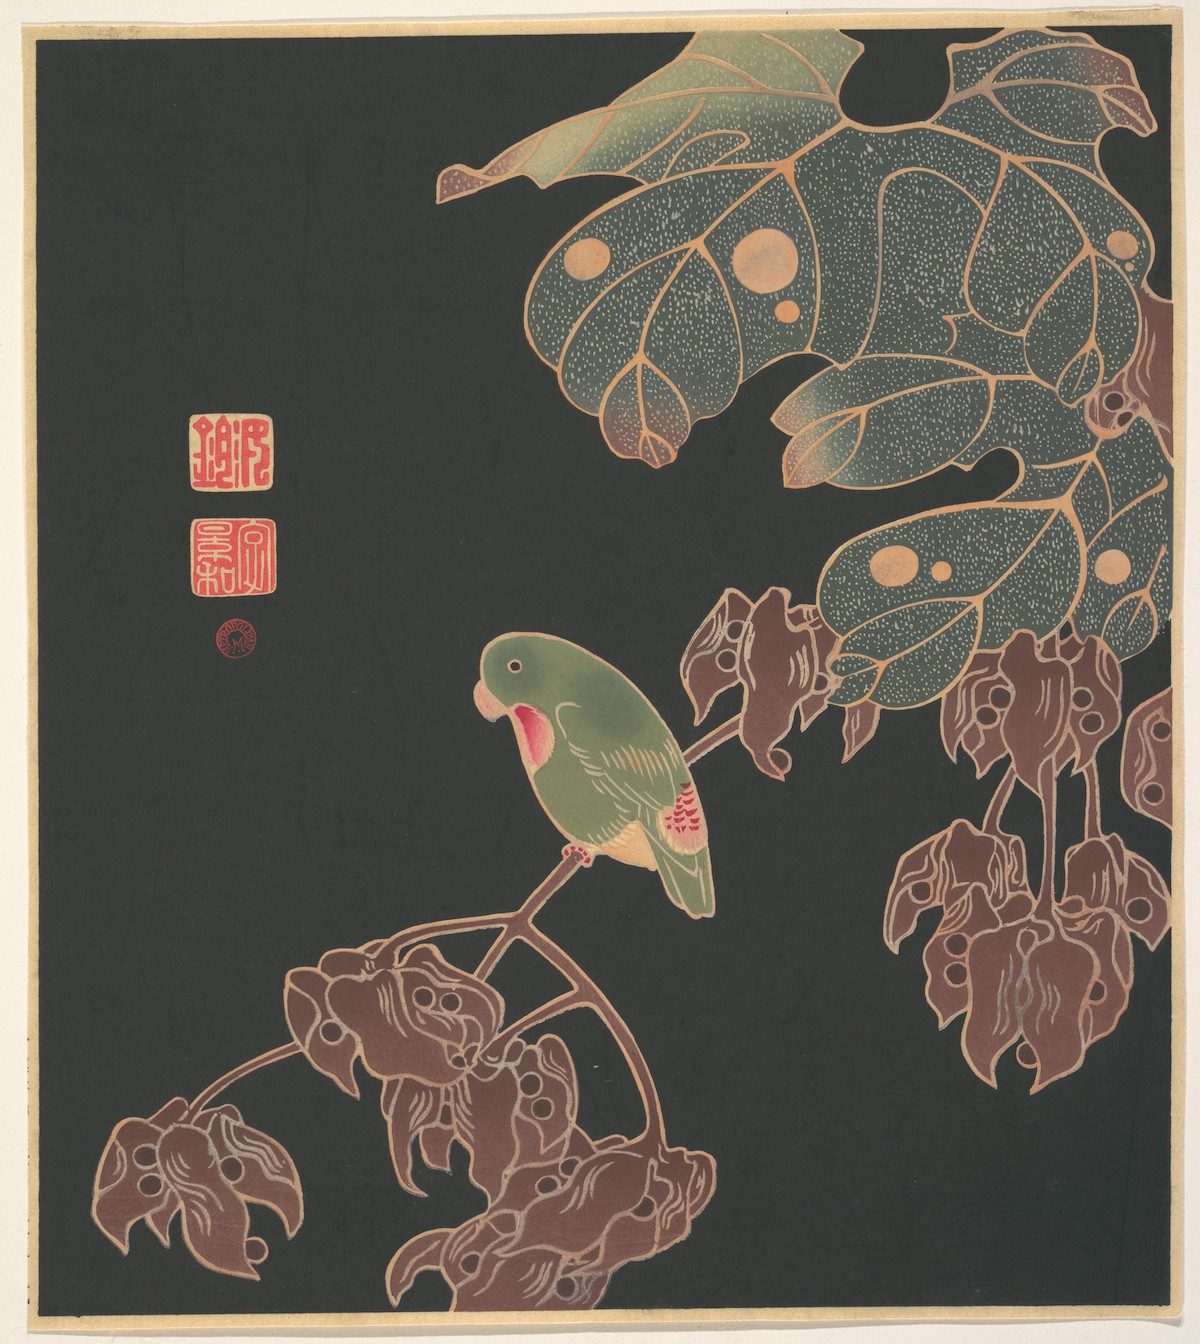 The Paroquet (ca. 1900) illustration by Ito Jakuchu. 